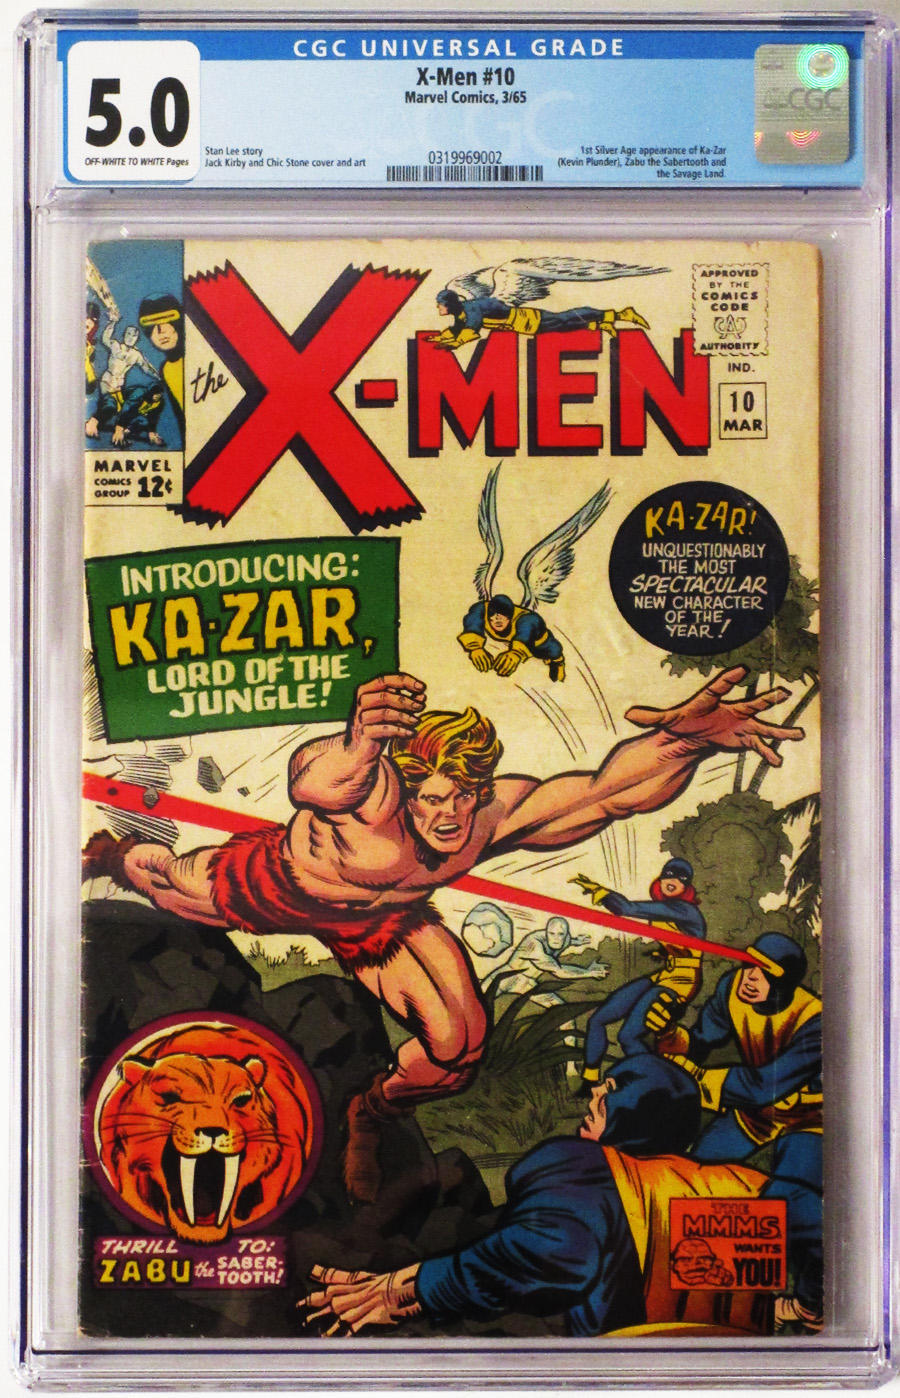 X-Men Vol 1 #10 Cover C CGC Graded 5.0